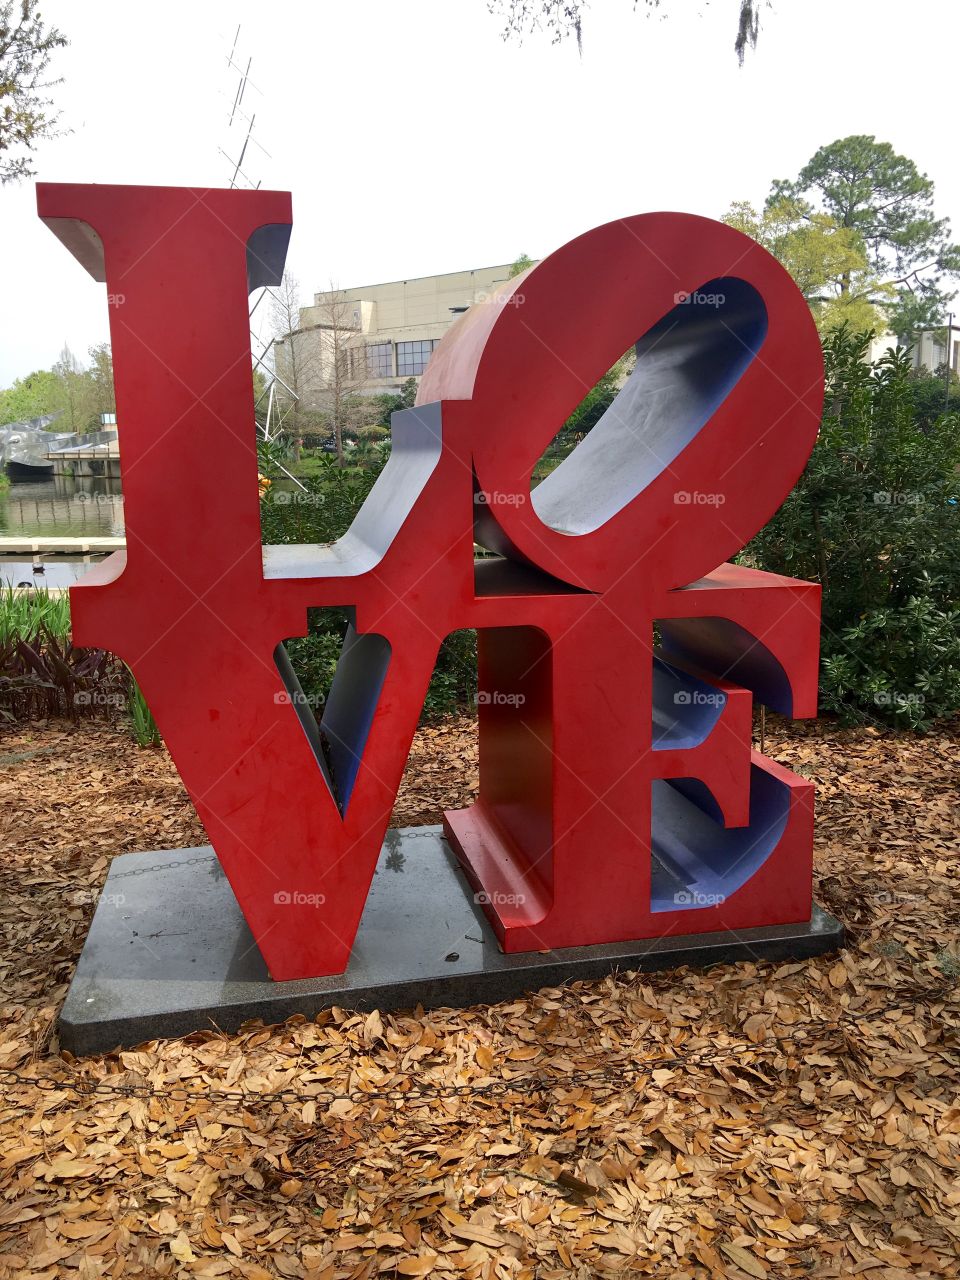 Sculpture garden, New Orleans- LOVE